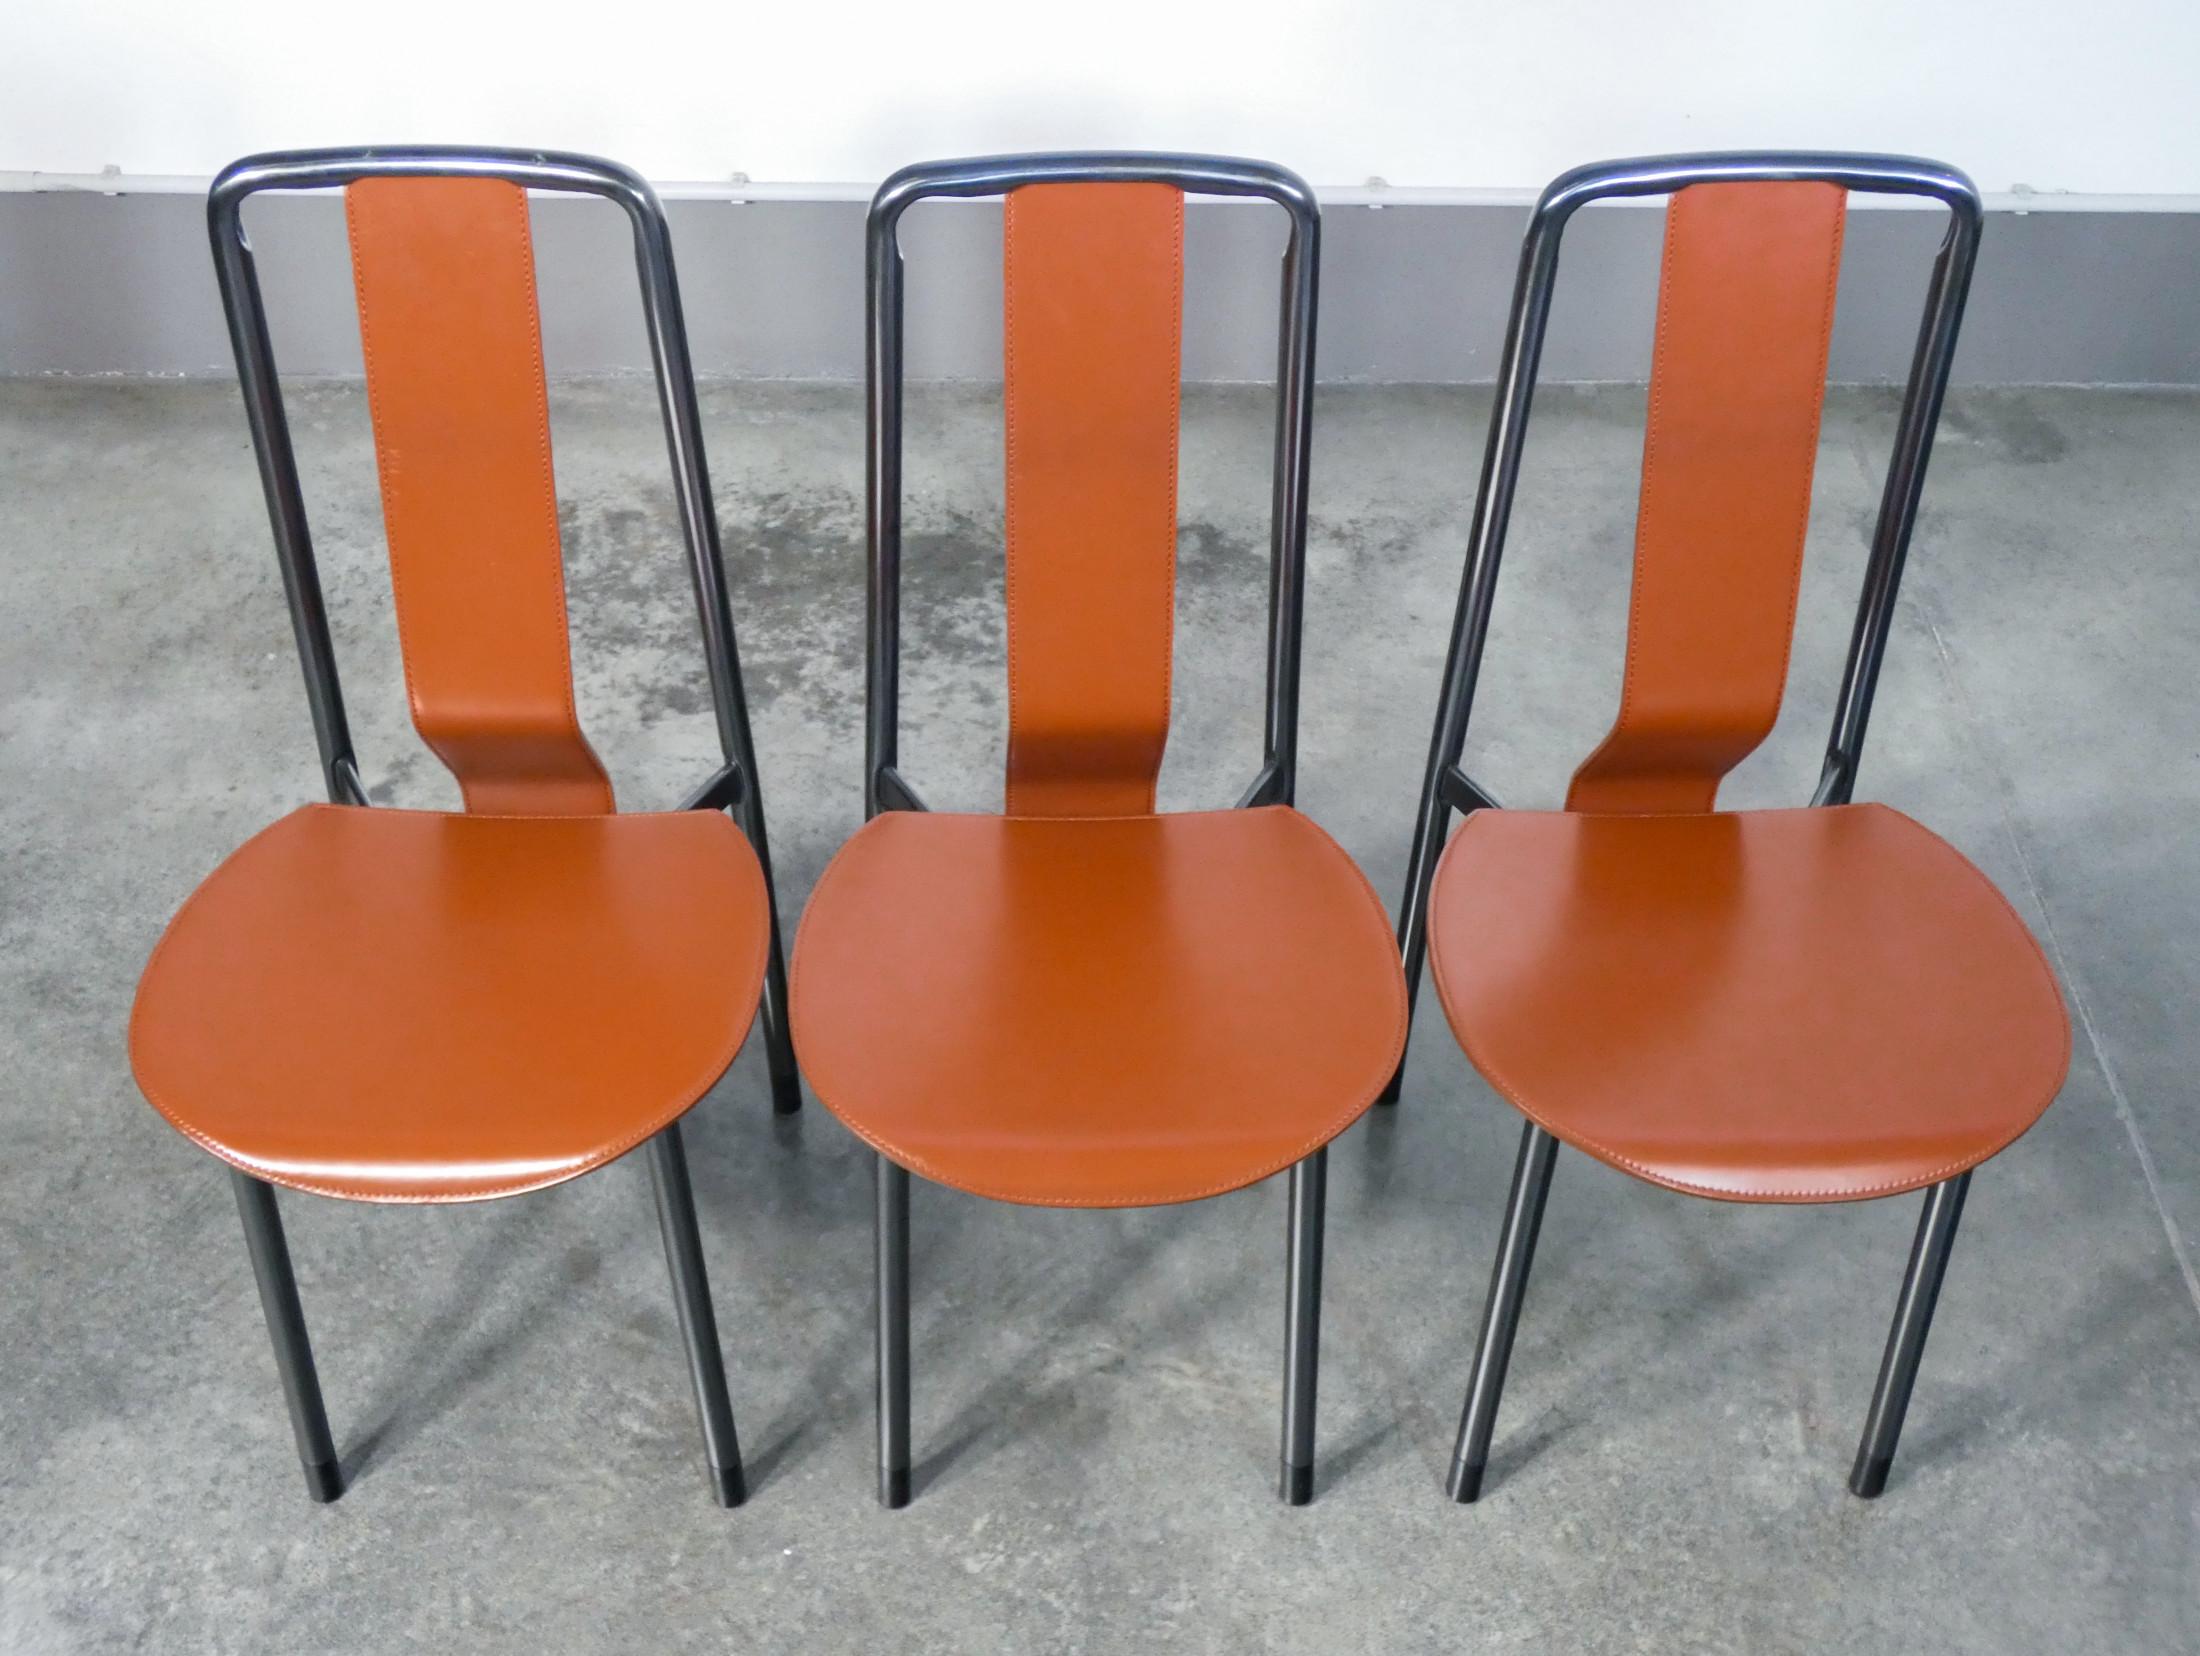 Late 20th Century Set of Six Irma Chairs, Designed by Achille Castiglioni for Zanotta. Italy, 1979